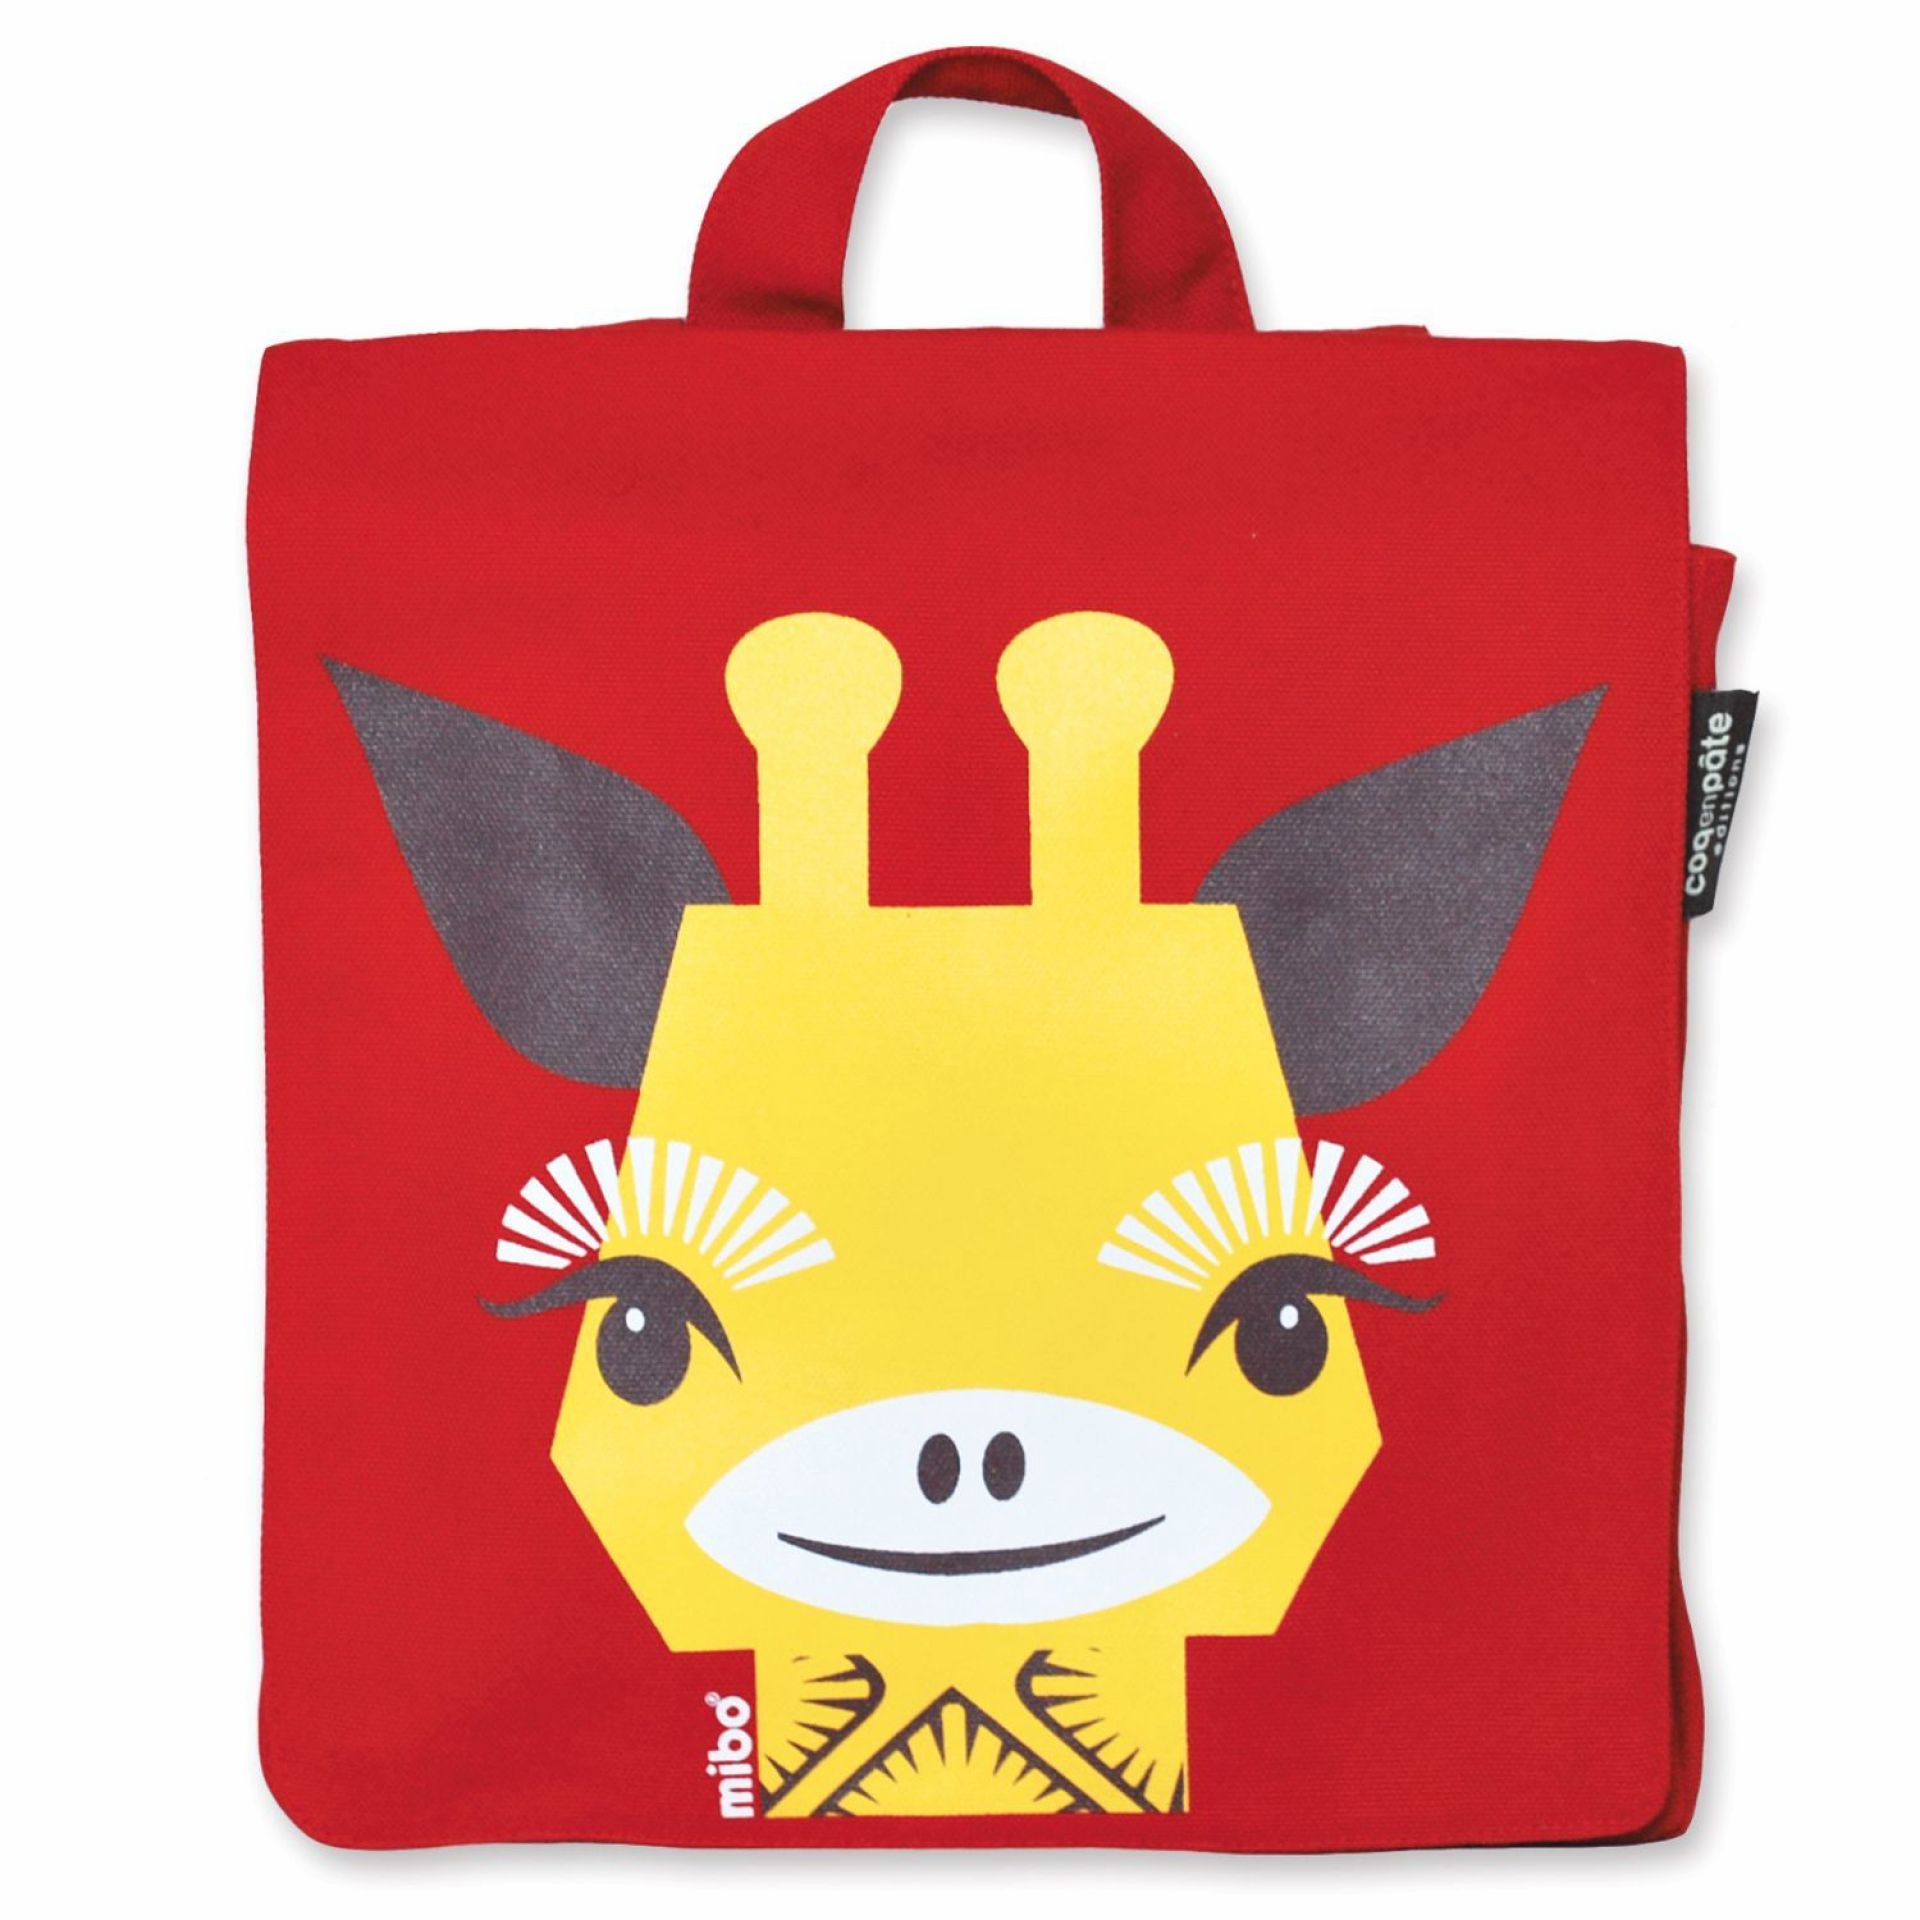 Backpack giraffe red Fantasie4Kids SINGLE PIECES